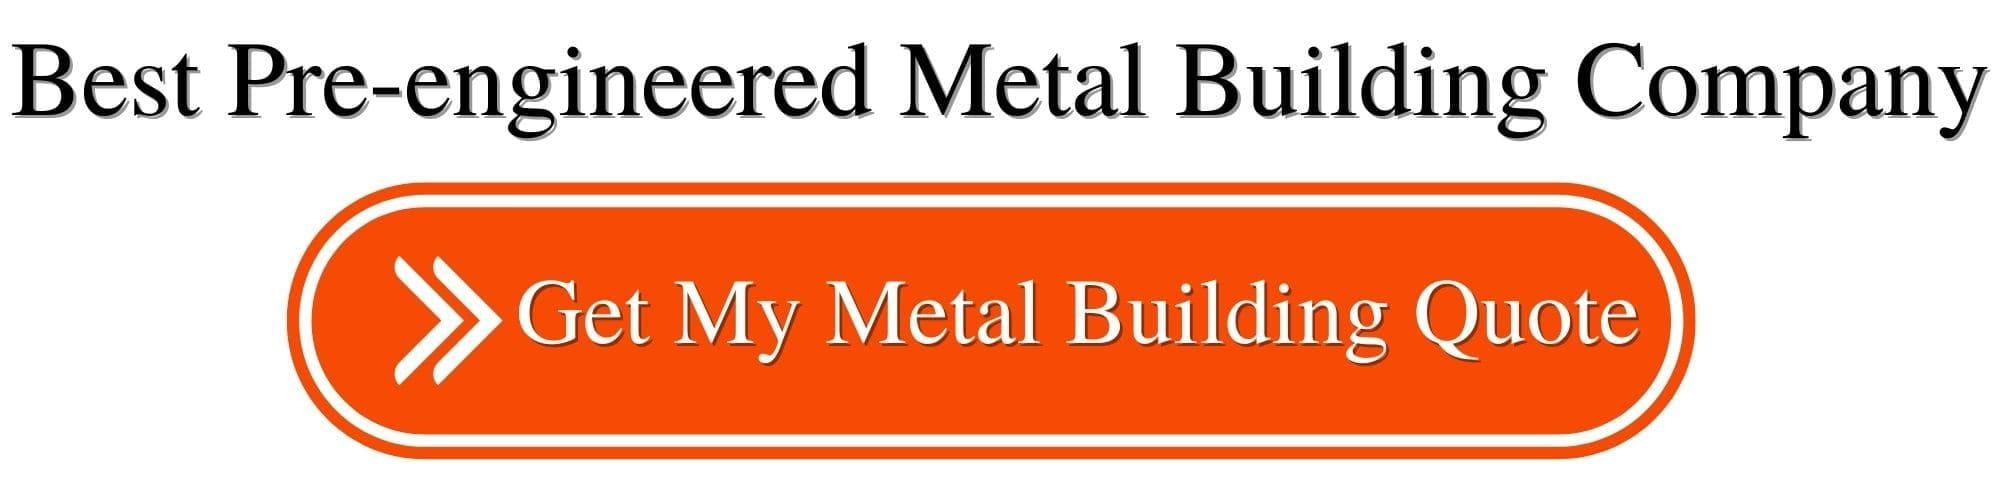 best-pre-engineered-metal-building-company